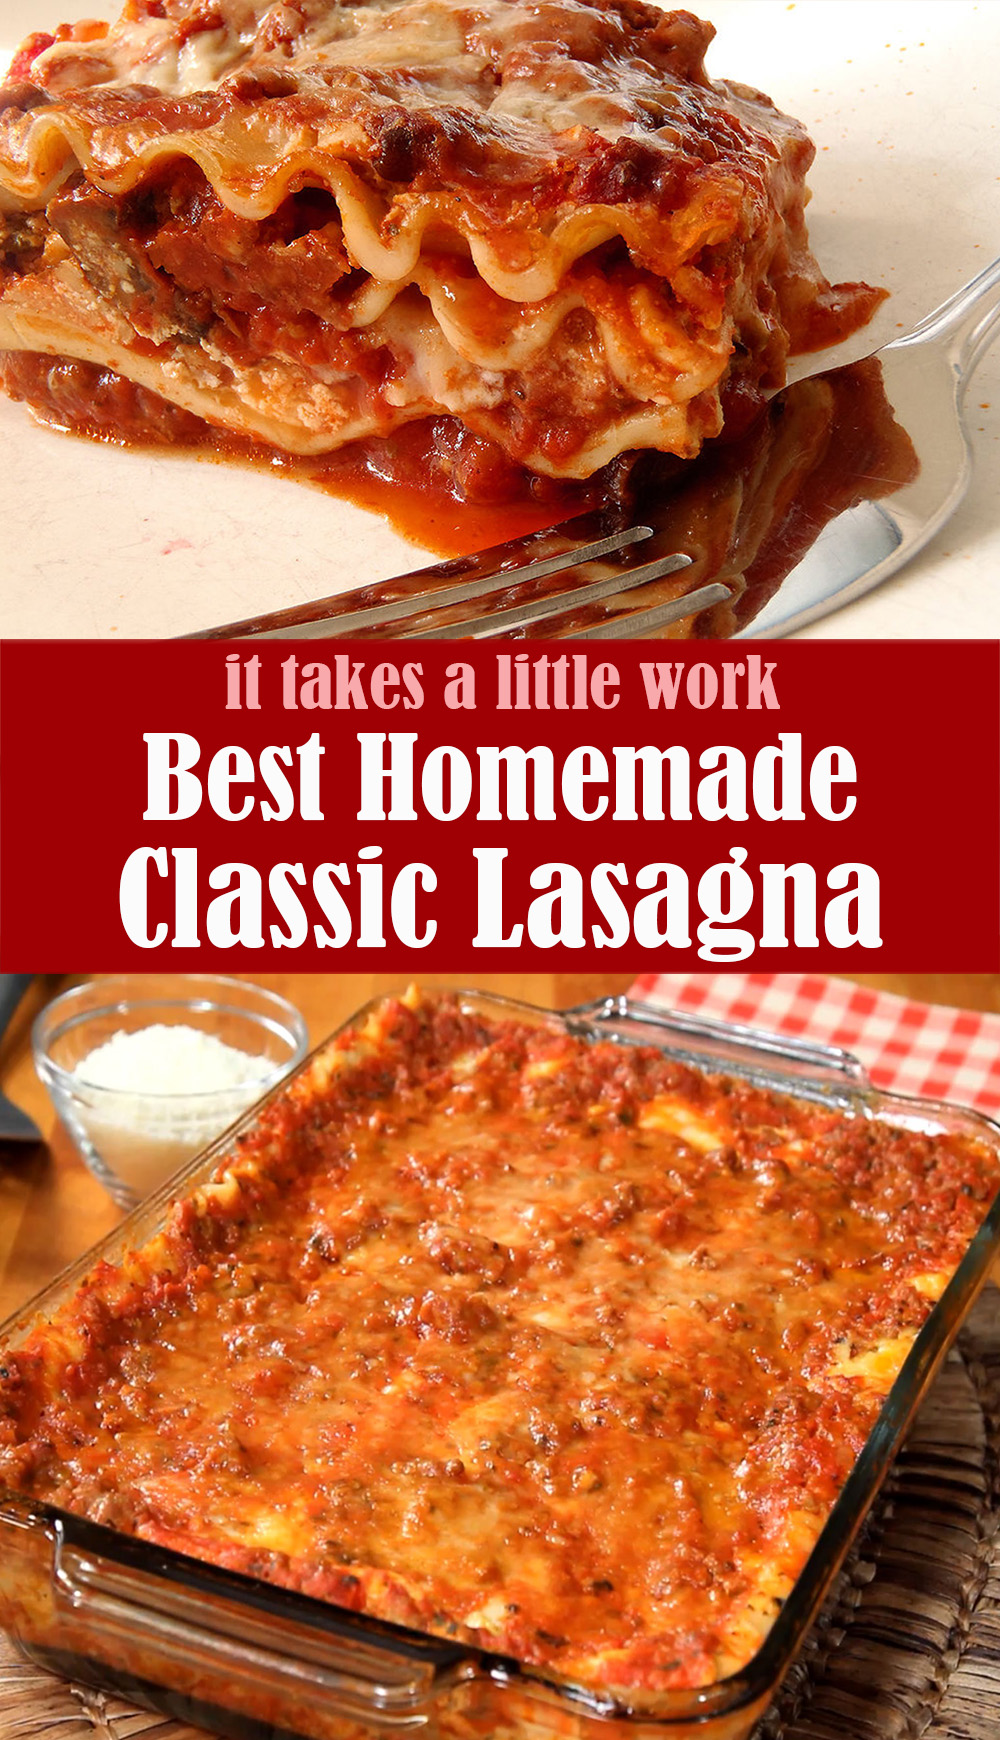 Best Homemade Classic Lasagna